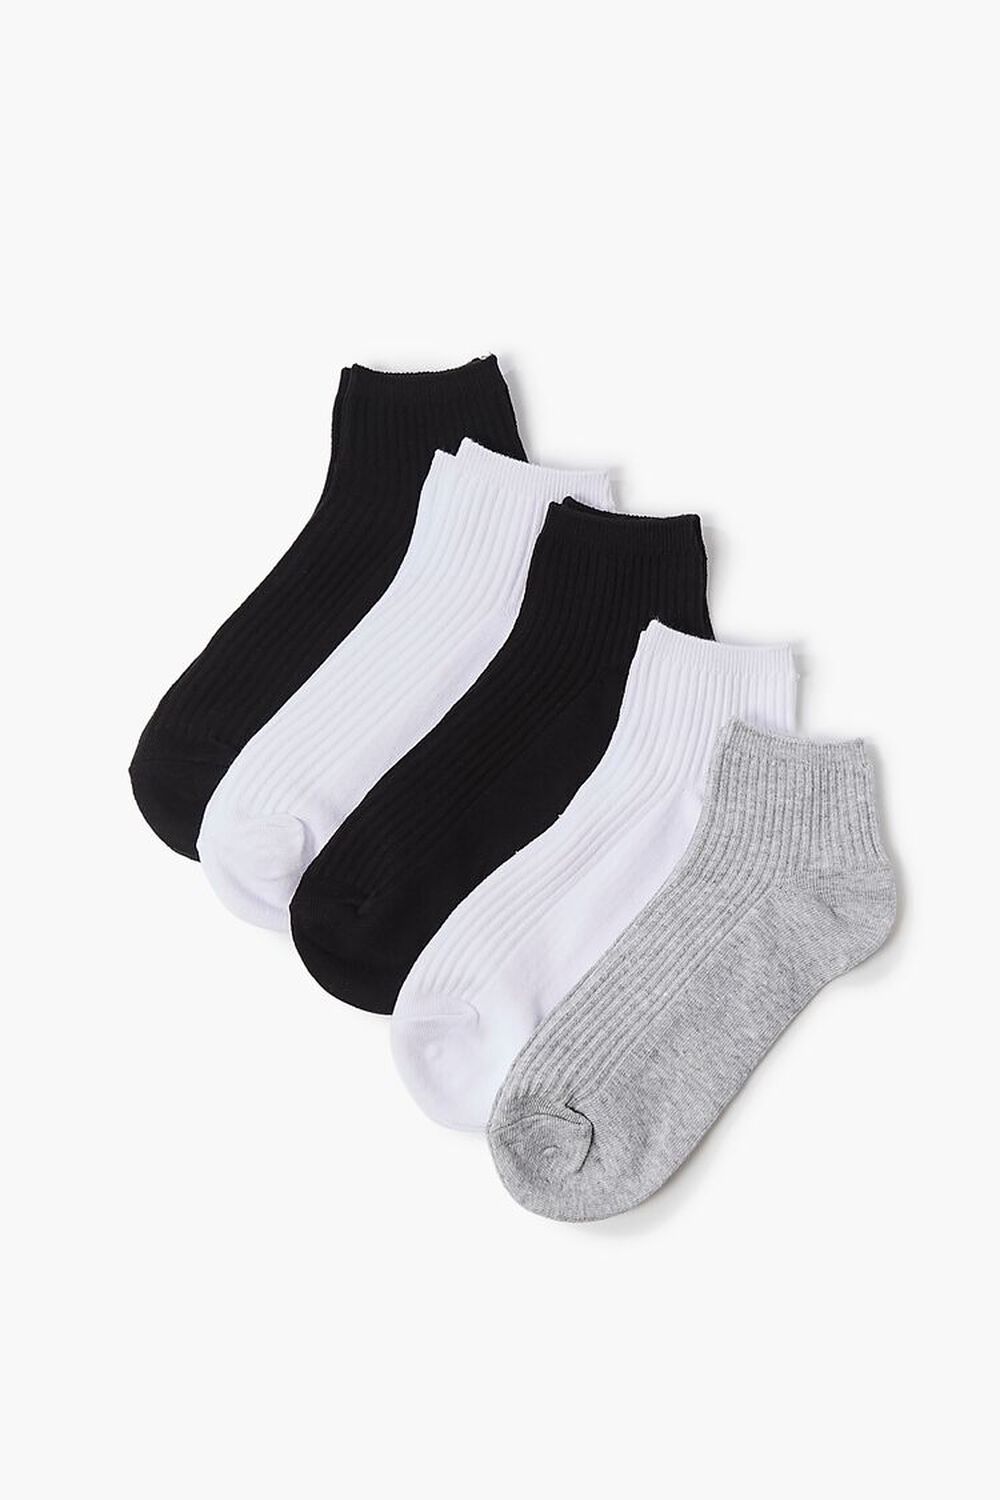 Ribbed Ankle Socks - 5 pack, image 1